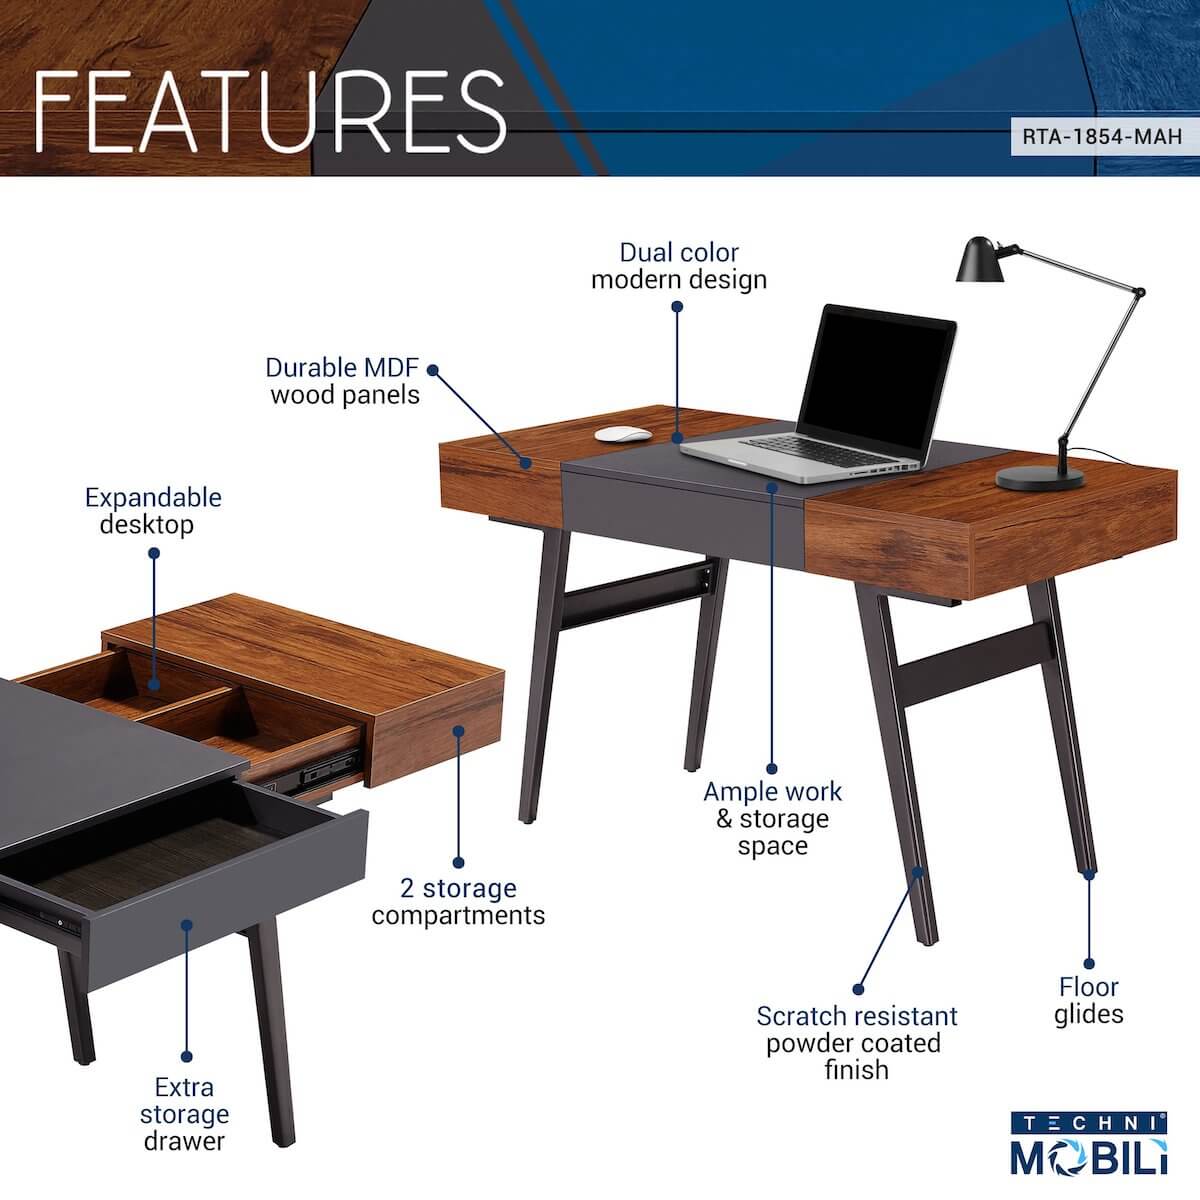 Techni Mobili Espresso Modern Writing Desk with Storage RTA-1460-ES Features